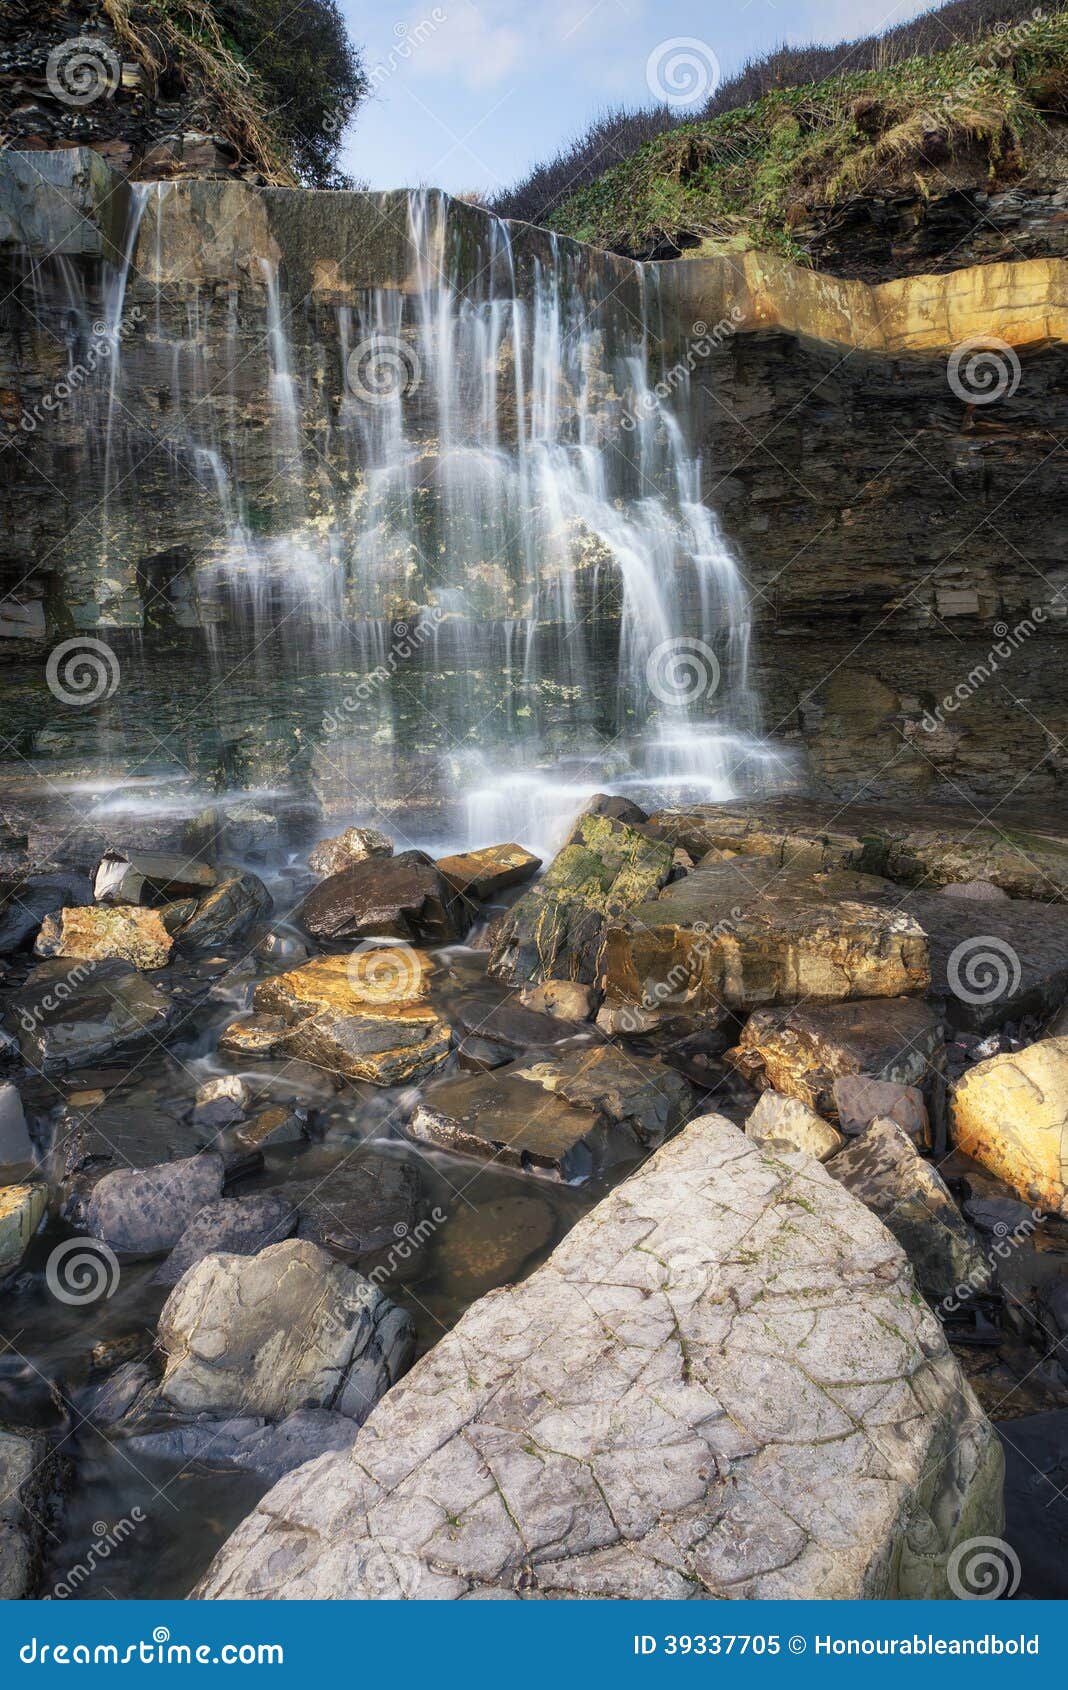 Beautiful Landscape Image Waterfall Flowing Into Rocks On Beach Stock